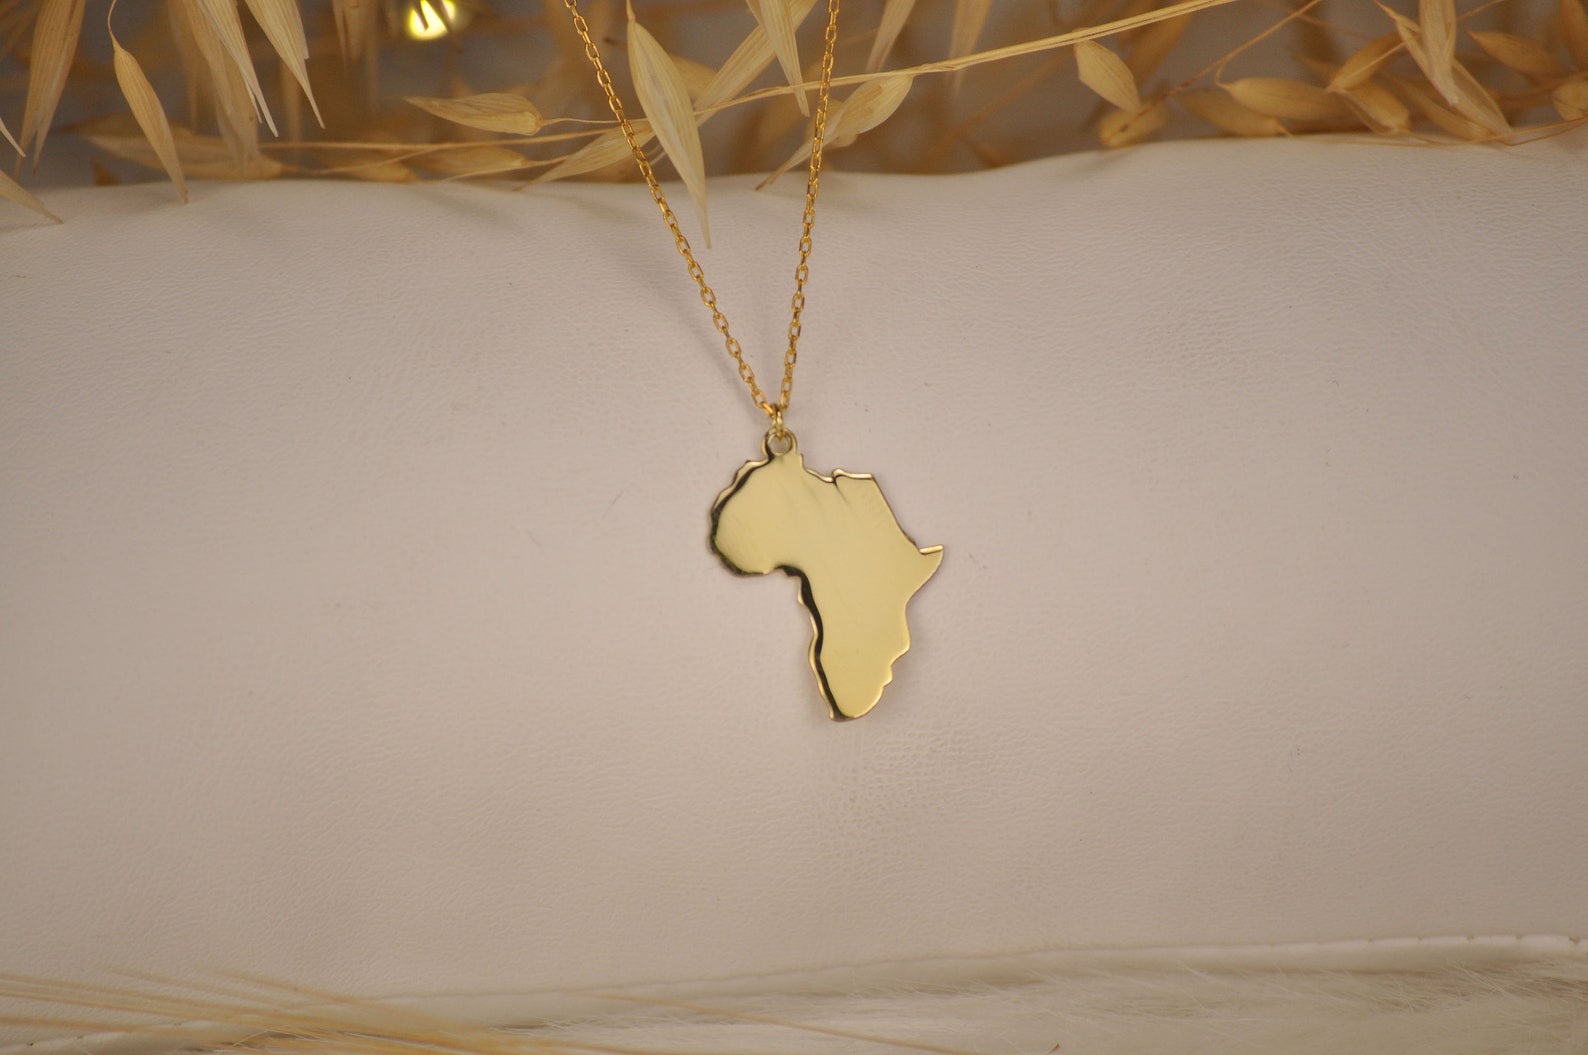 14K Gold Africa Necklace - Image 1